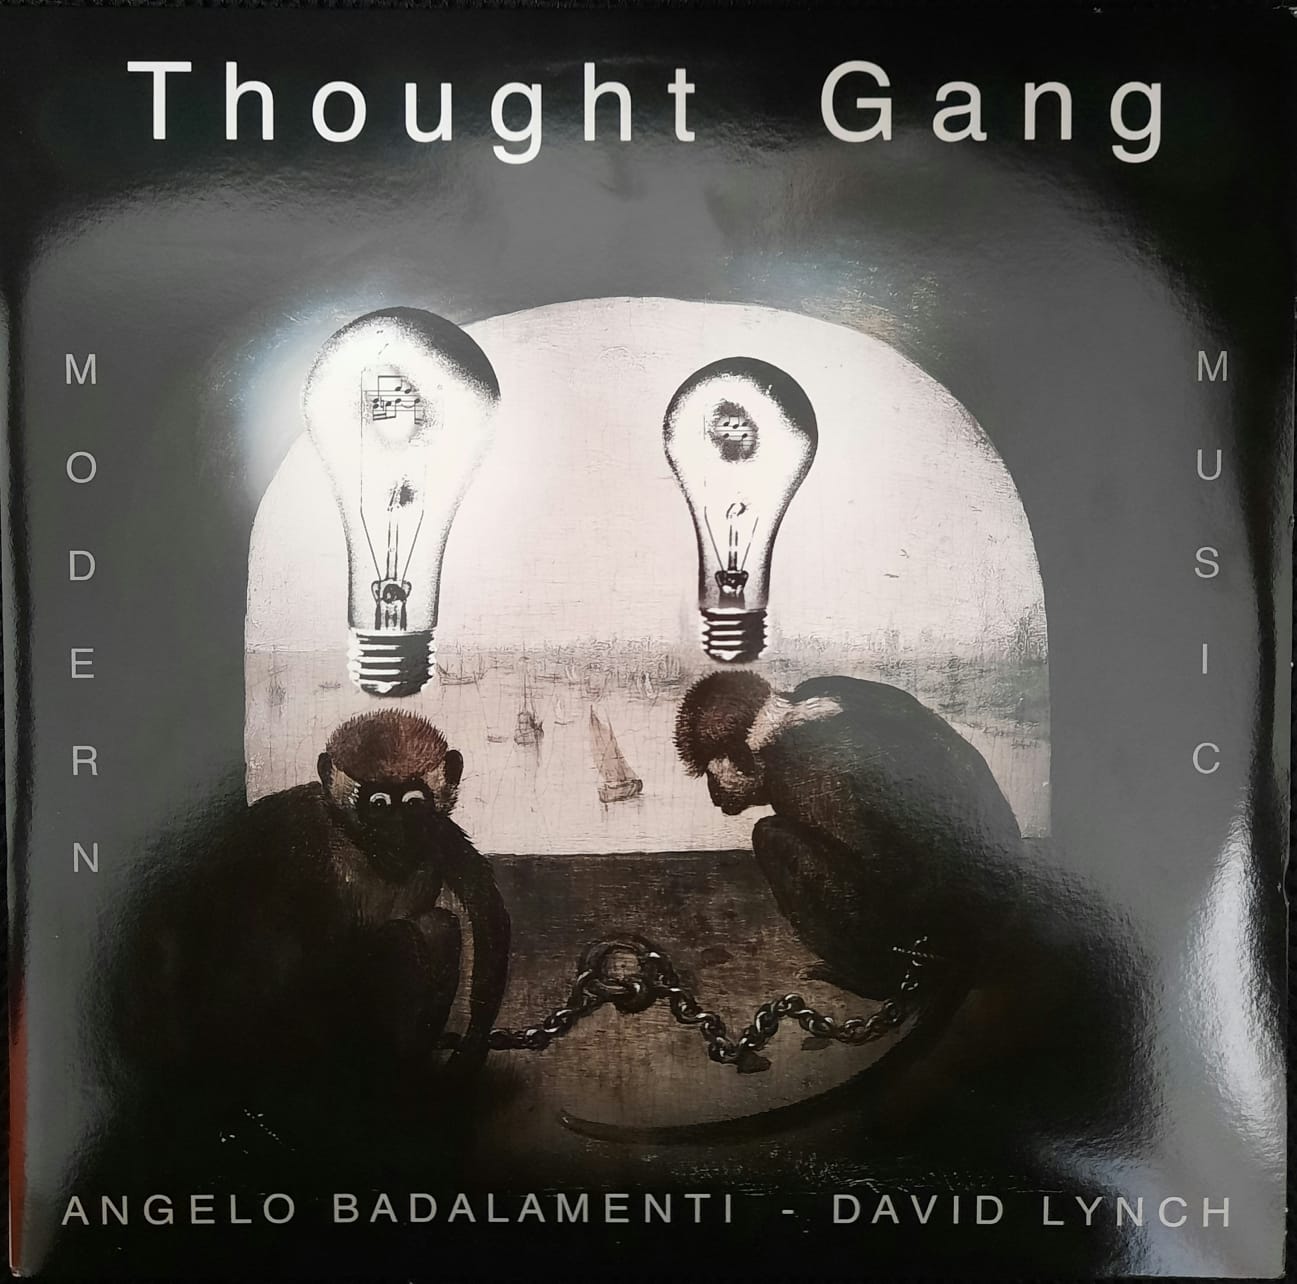 Angelo Badalamenti & David Lynch – Thought Gang (LP, EE.UU., 2018)